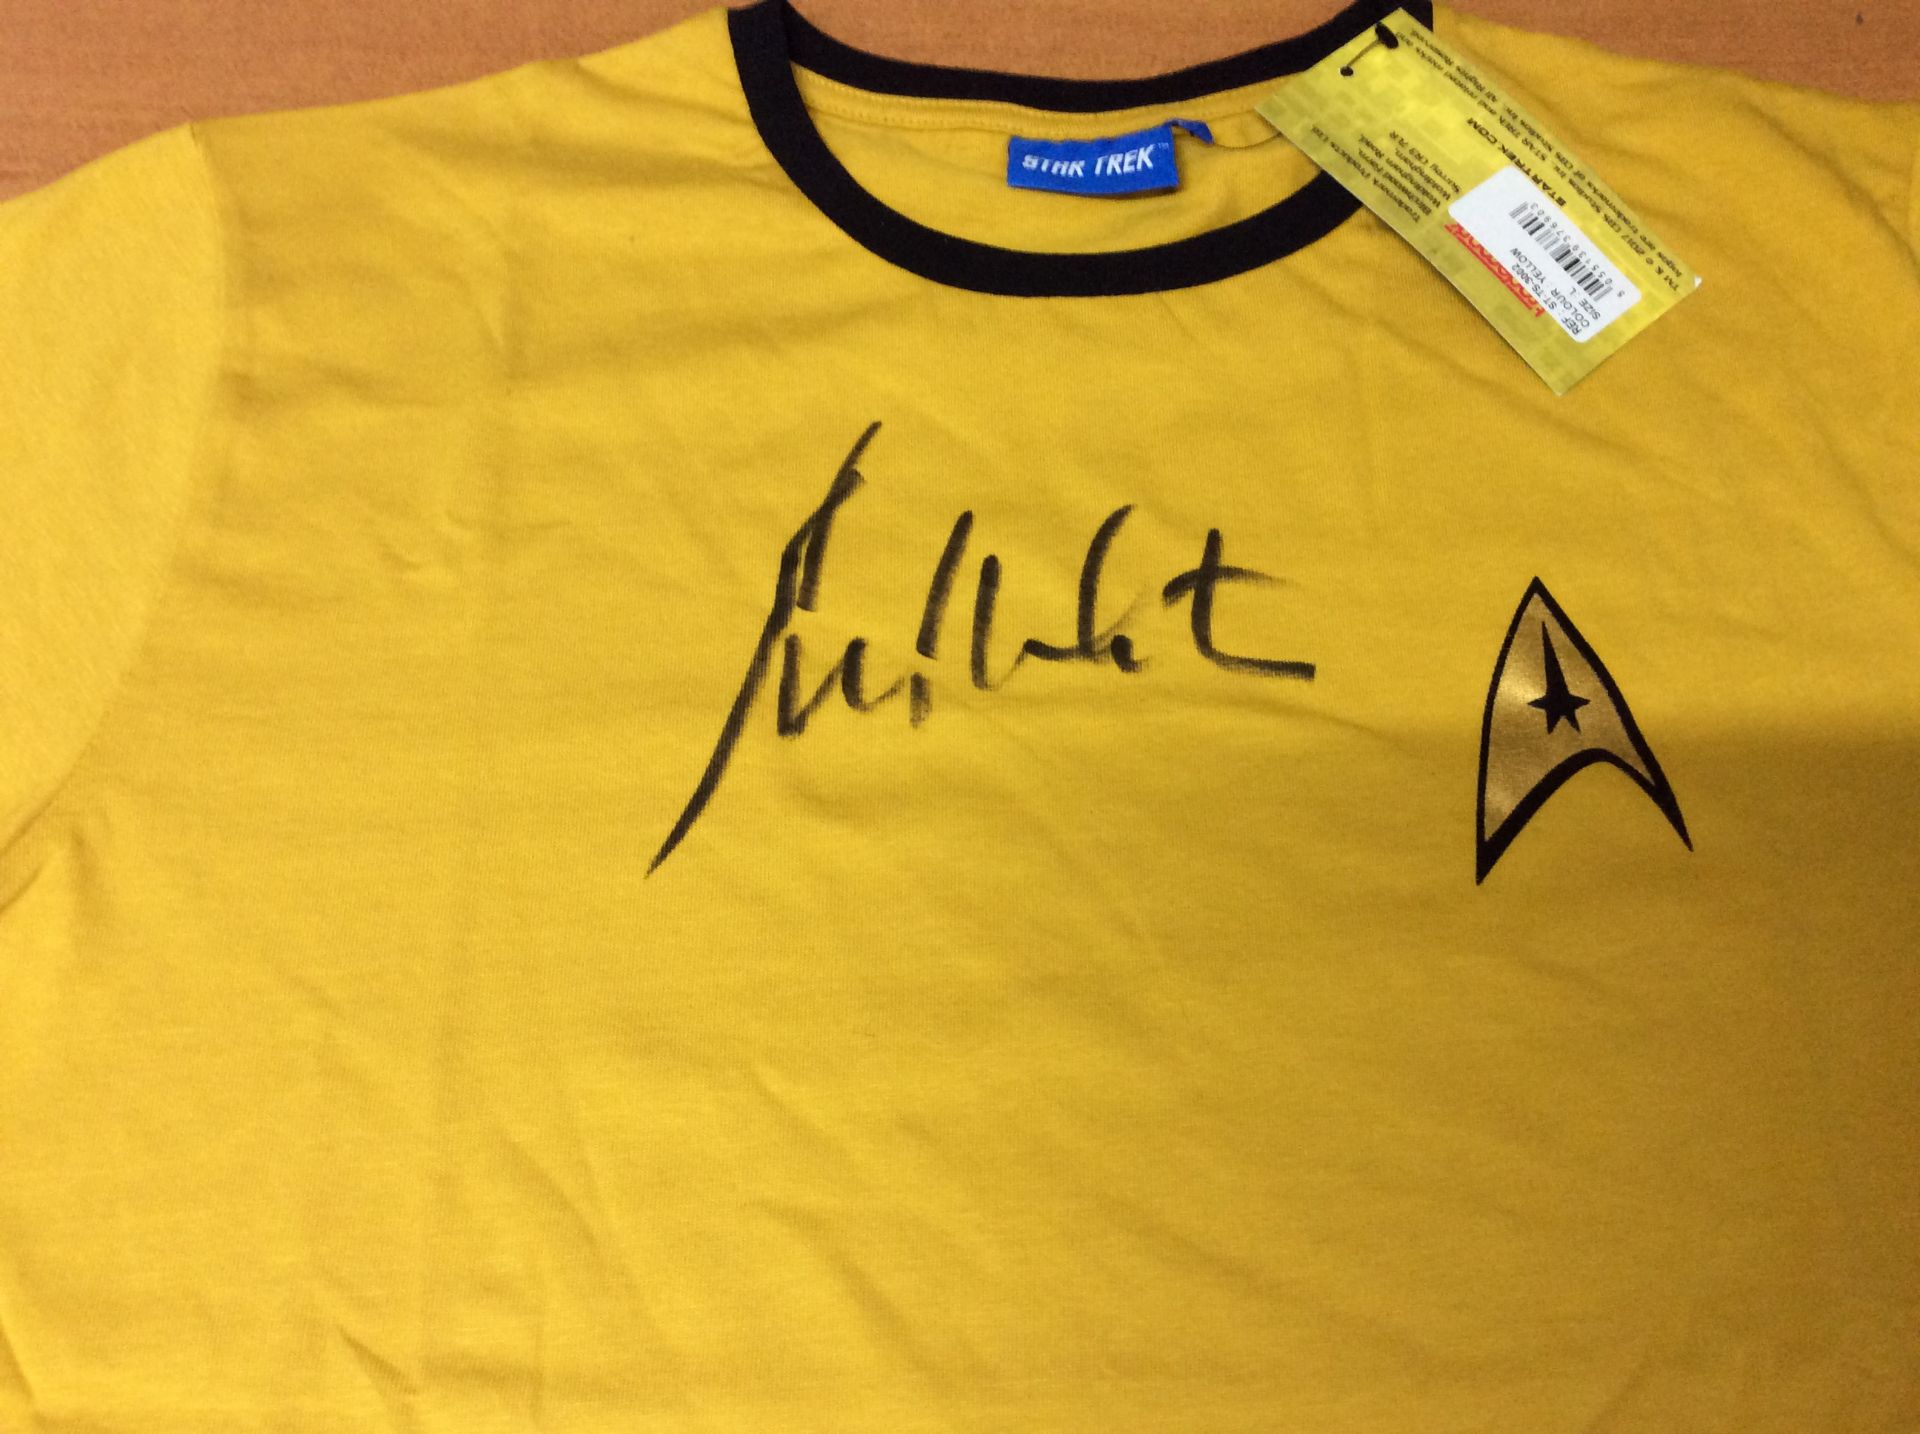 Star Trek Signed T-Shirt By William Shatner - Image 2 of 5